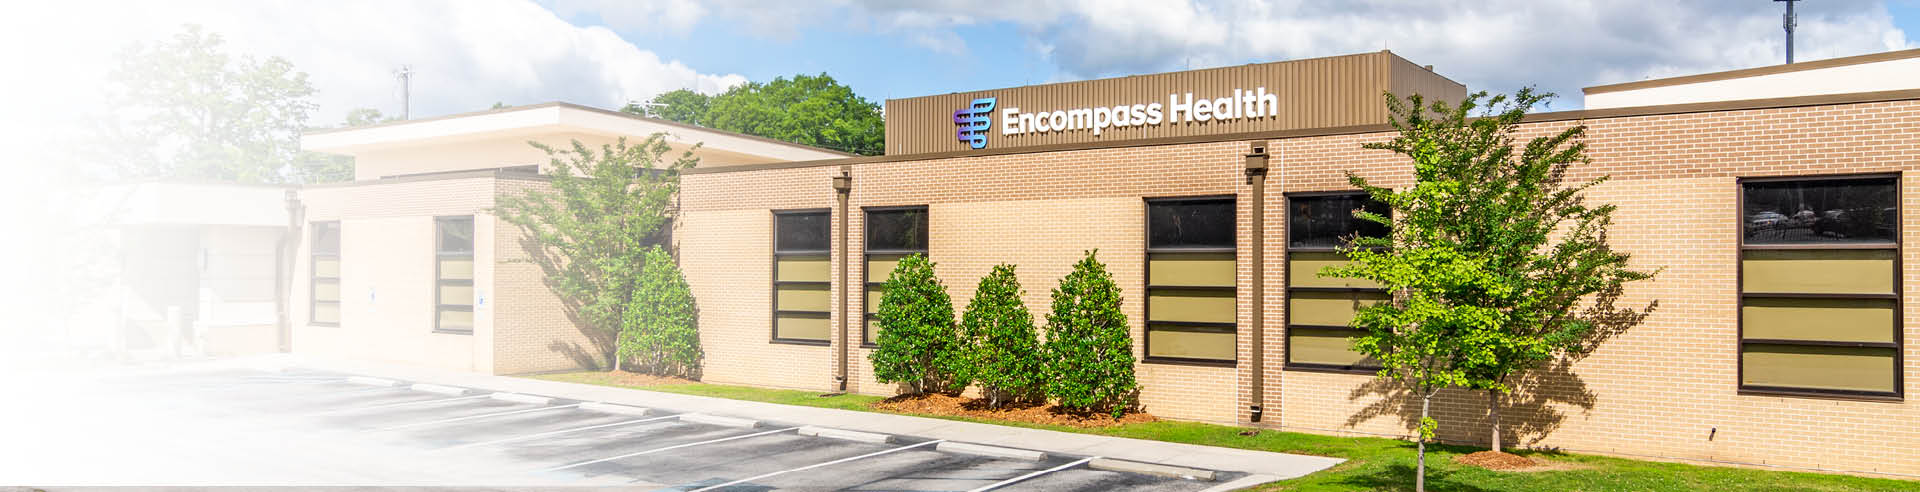 Encompass Health Rehabilitation Hospital of Chattanooga exterior